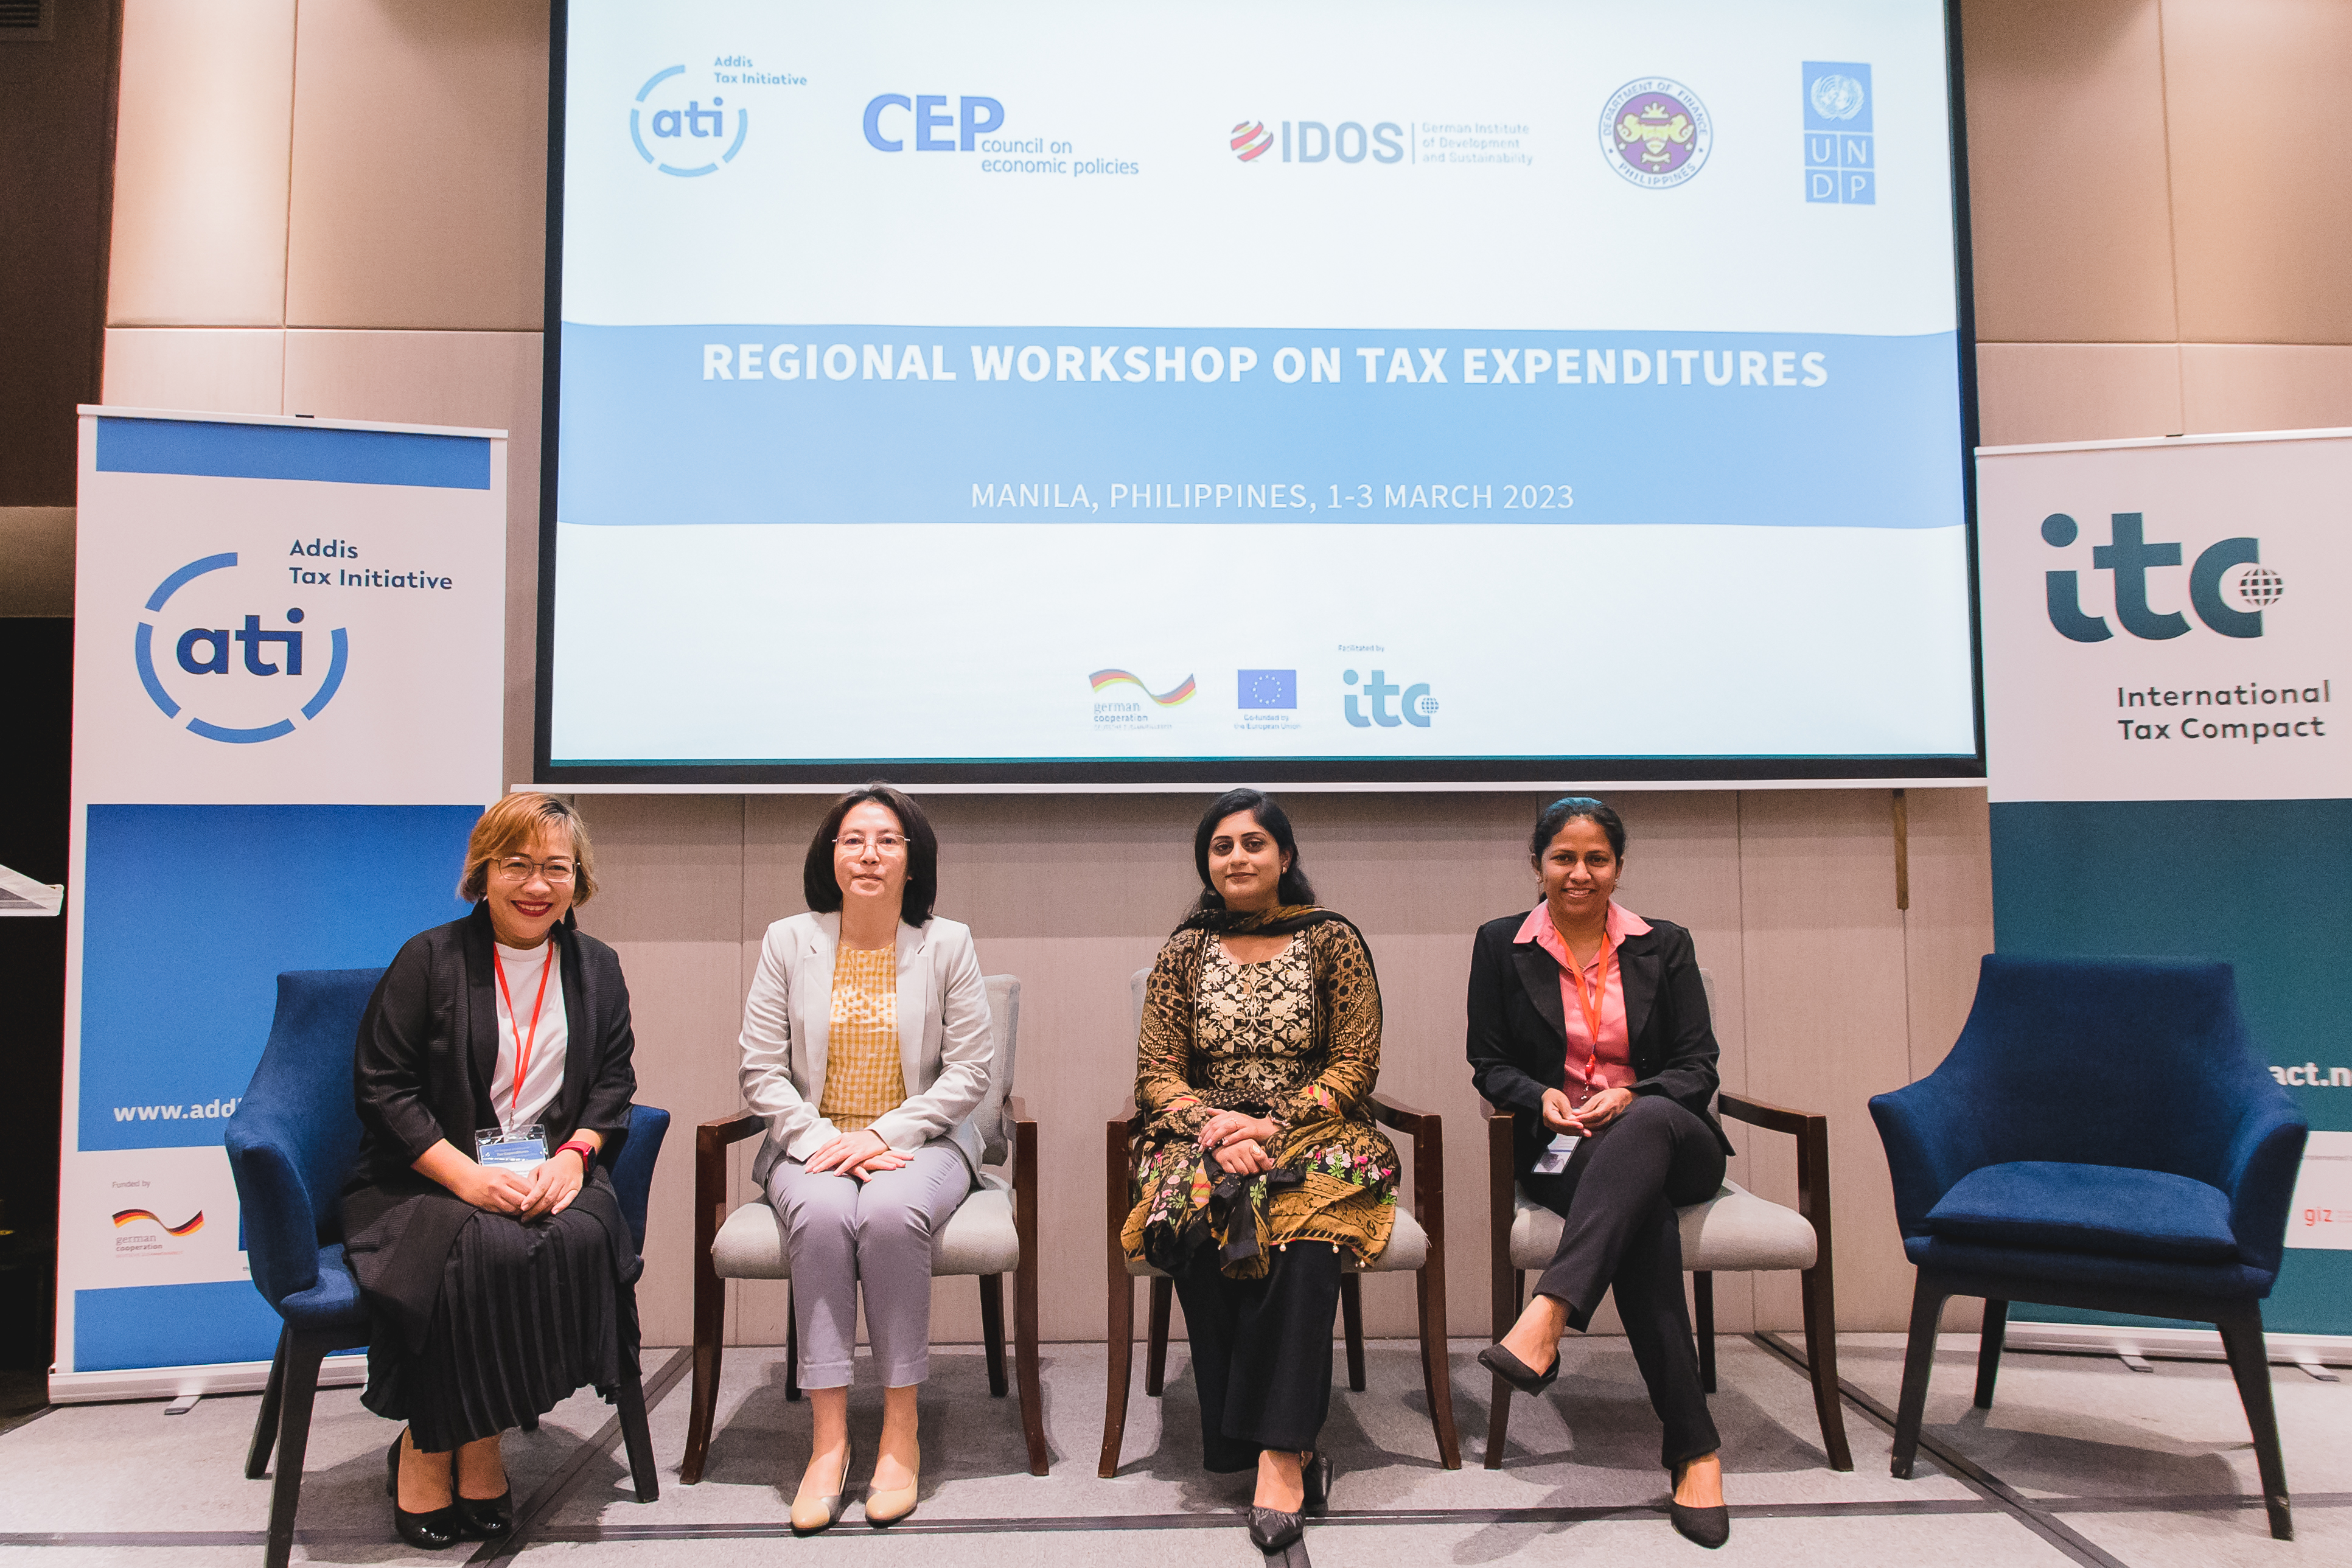 ATI regional workshop on Tax Expenditures: ASIA